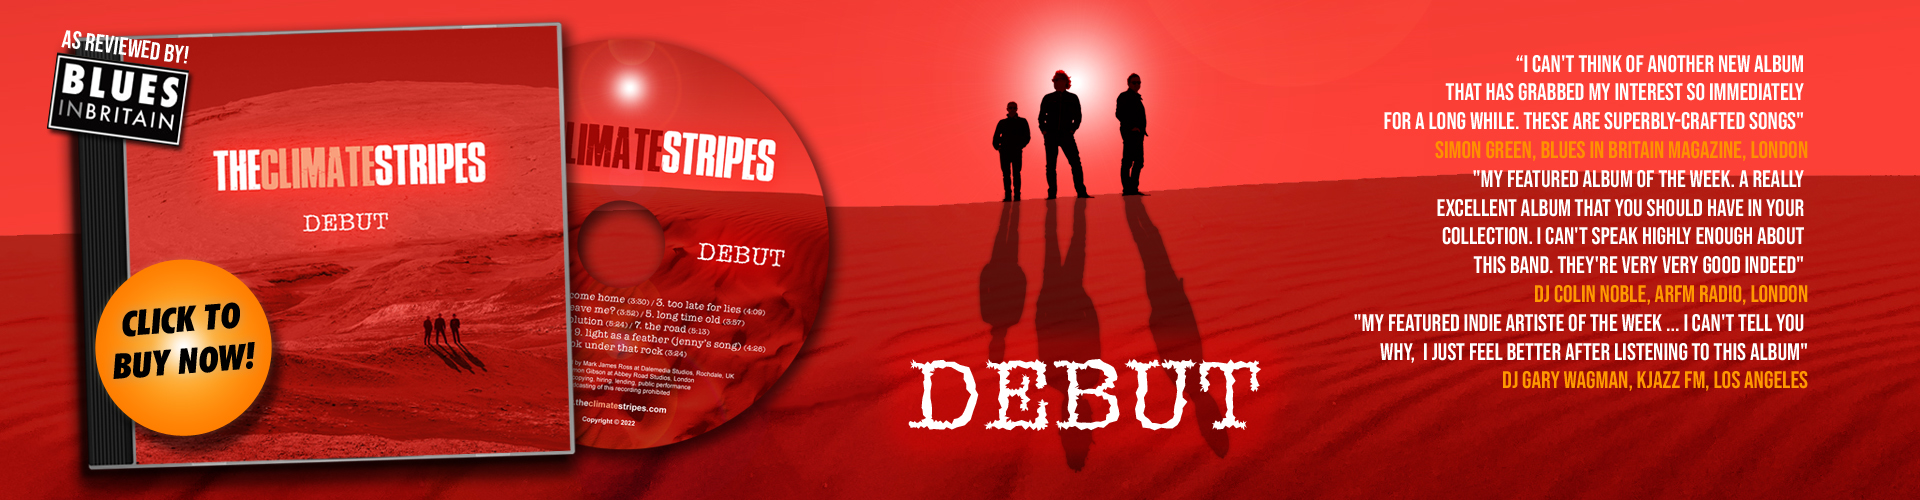 Buy our brand new album 'DEBUT' today! Ten outstanding original blues / rock tracks. Just £9.99 inc P&P!